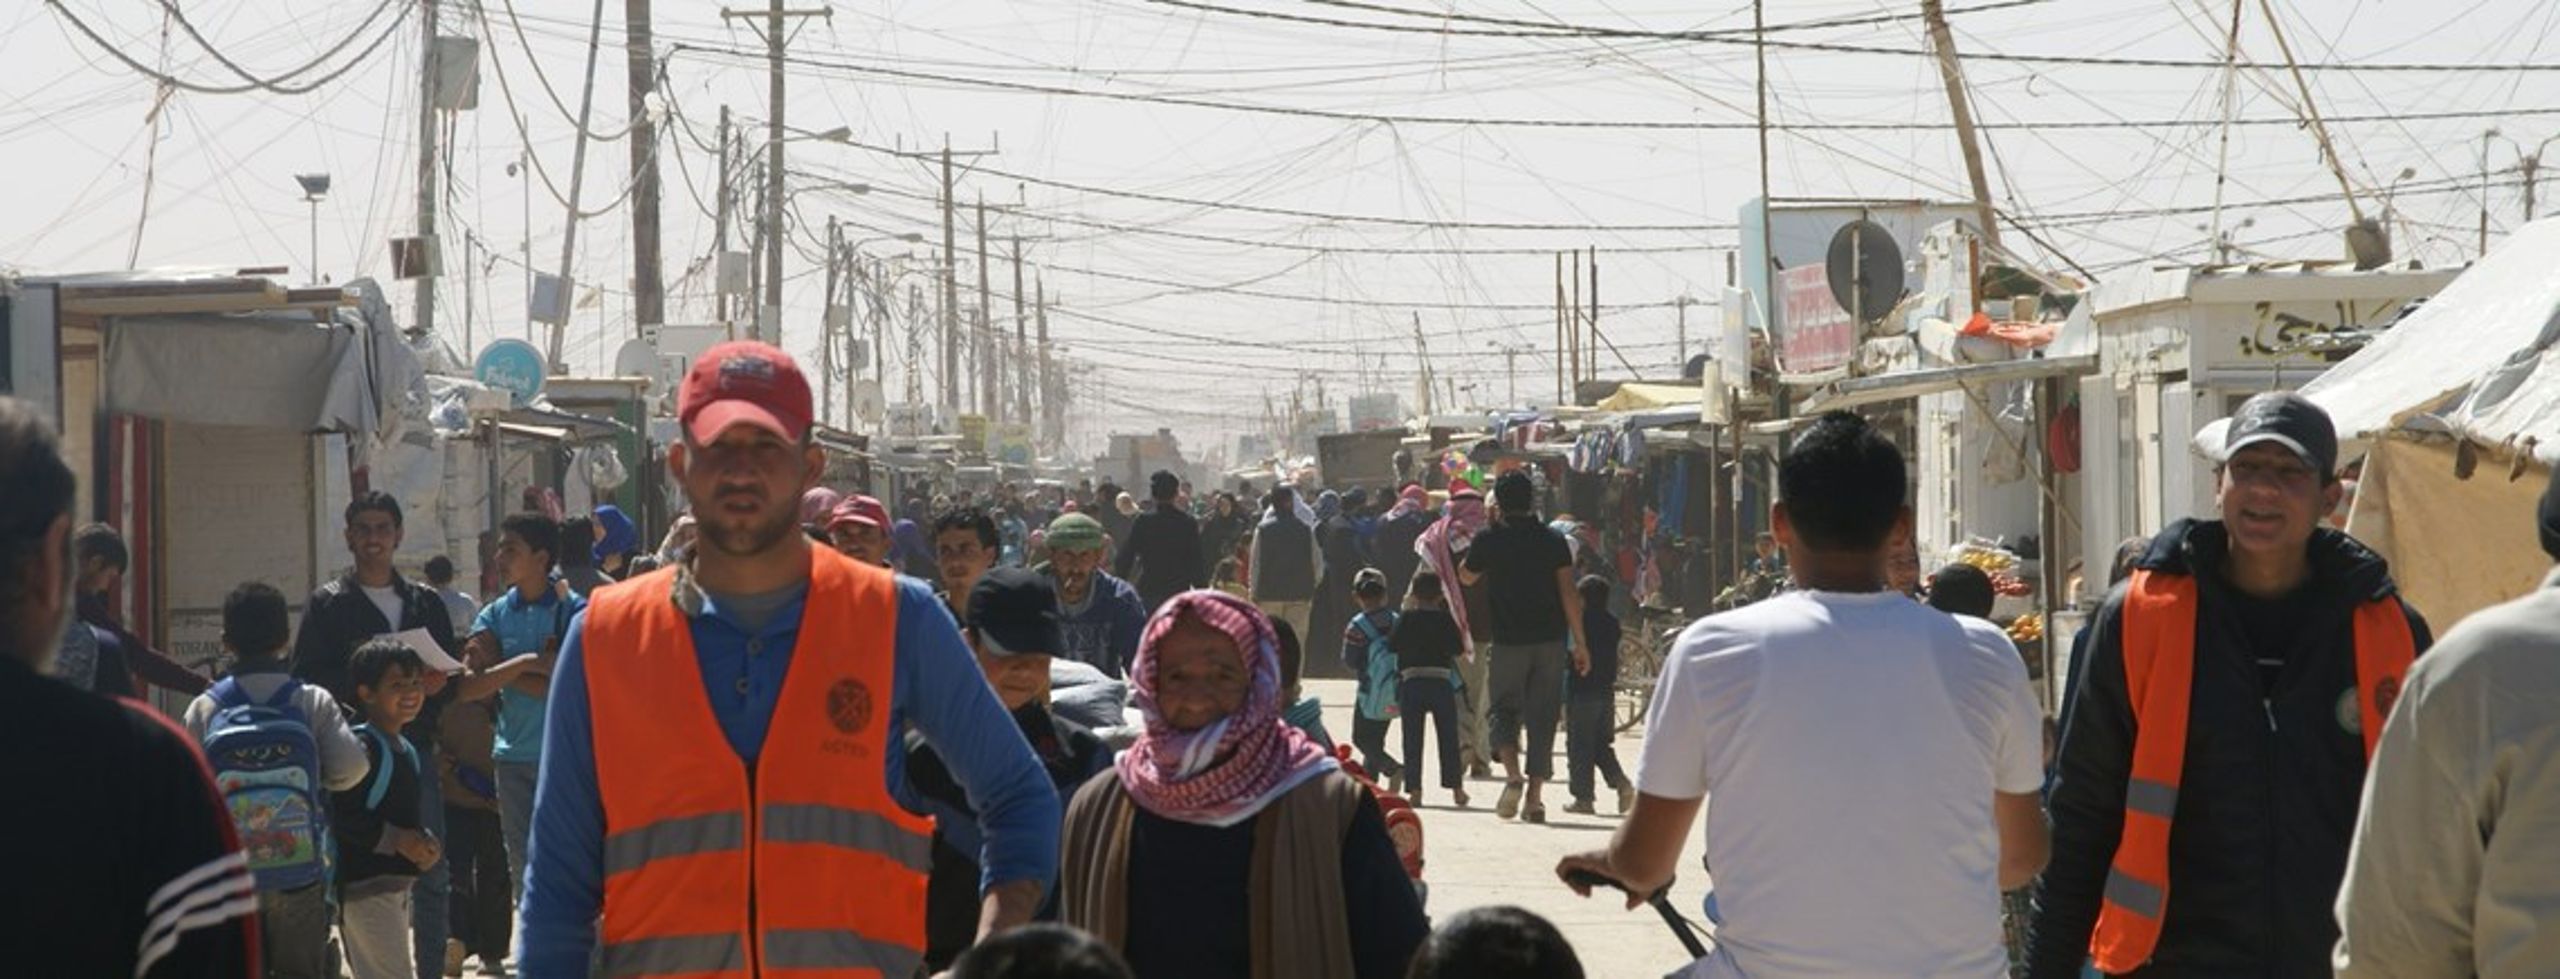 Billede fra hovedgaden i&nbsp;Zaatari-flygtningelejren i&nbsp;Jordan. Taget i&nbsp;marts 2015.&nbsp;